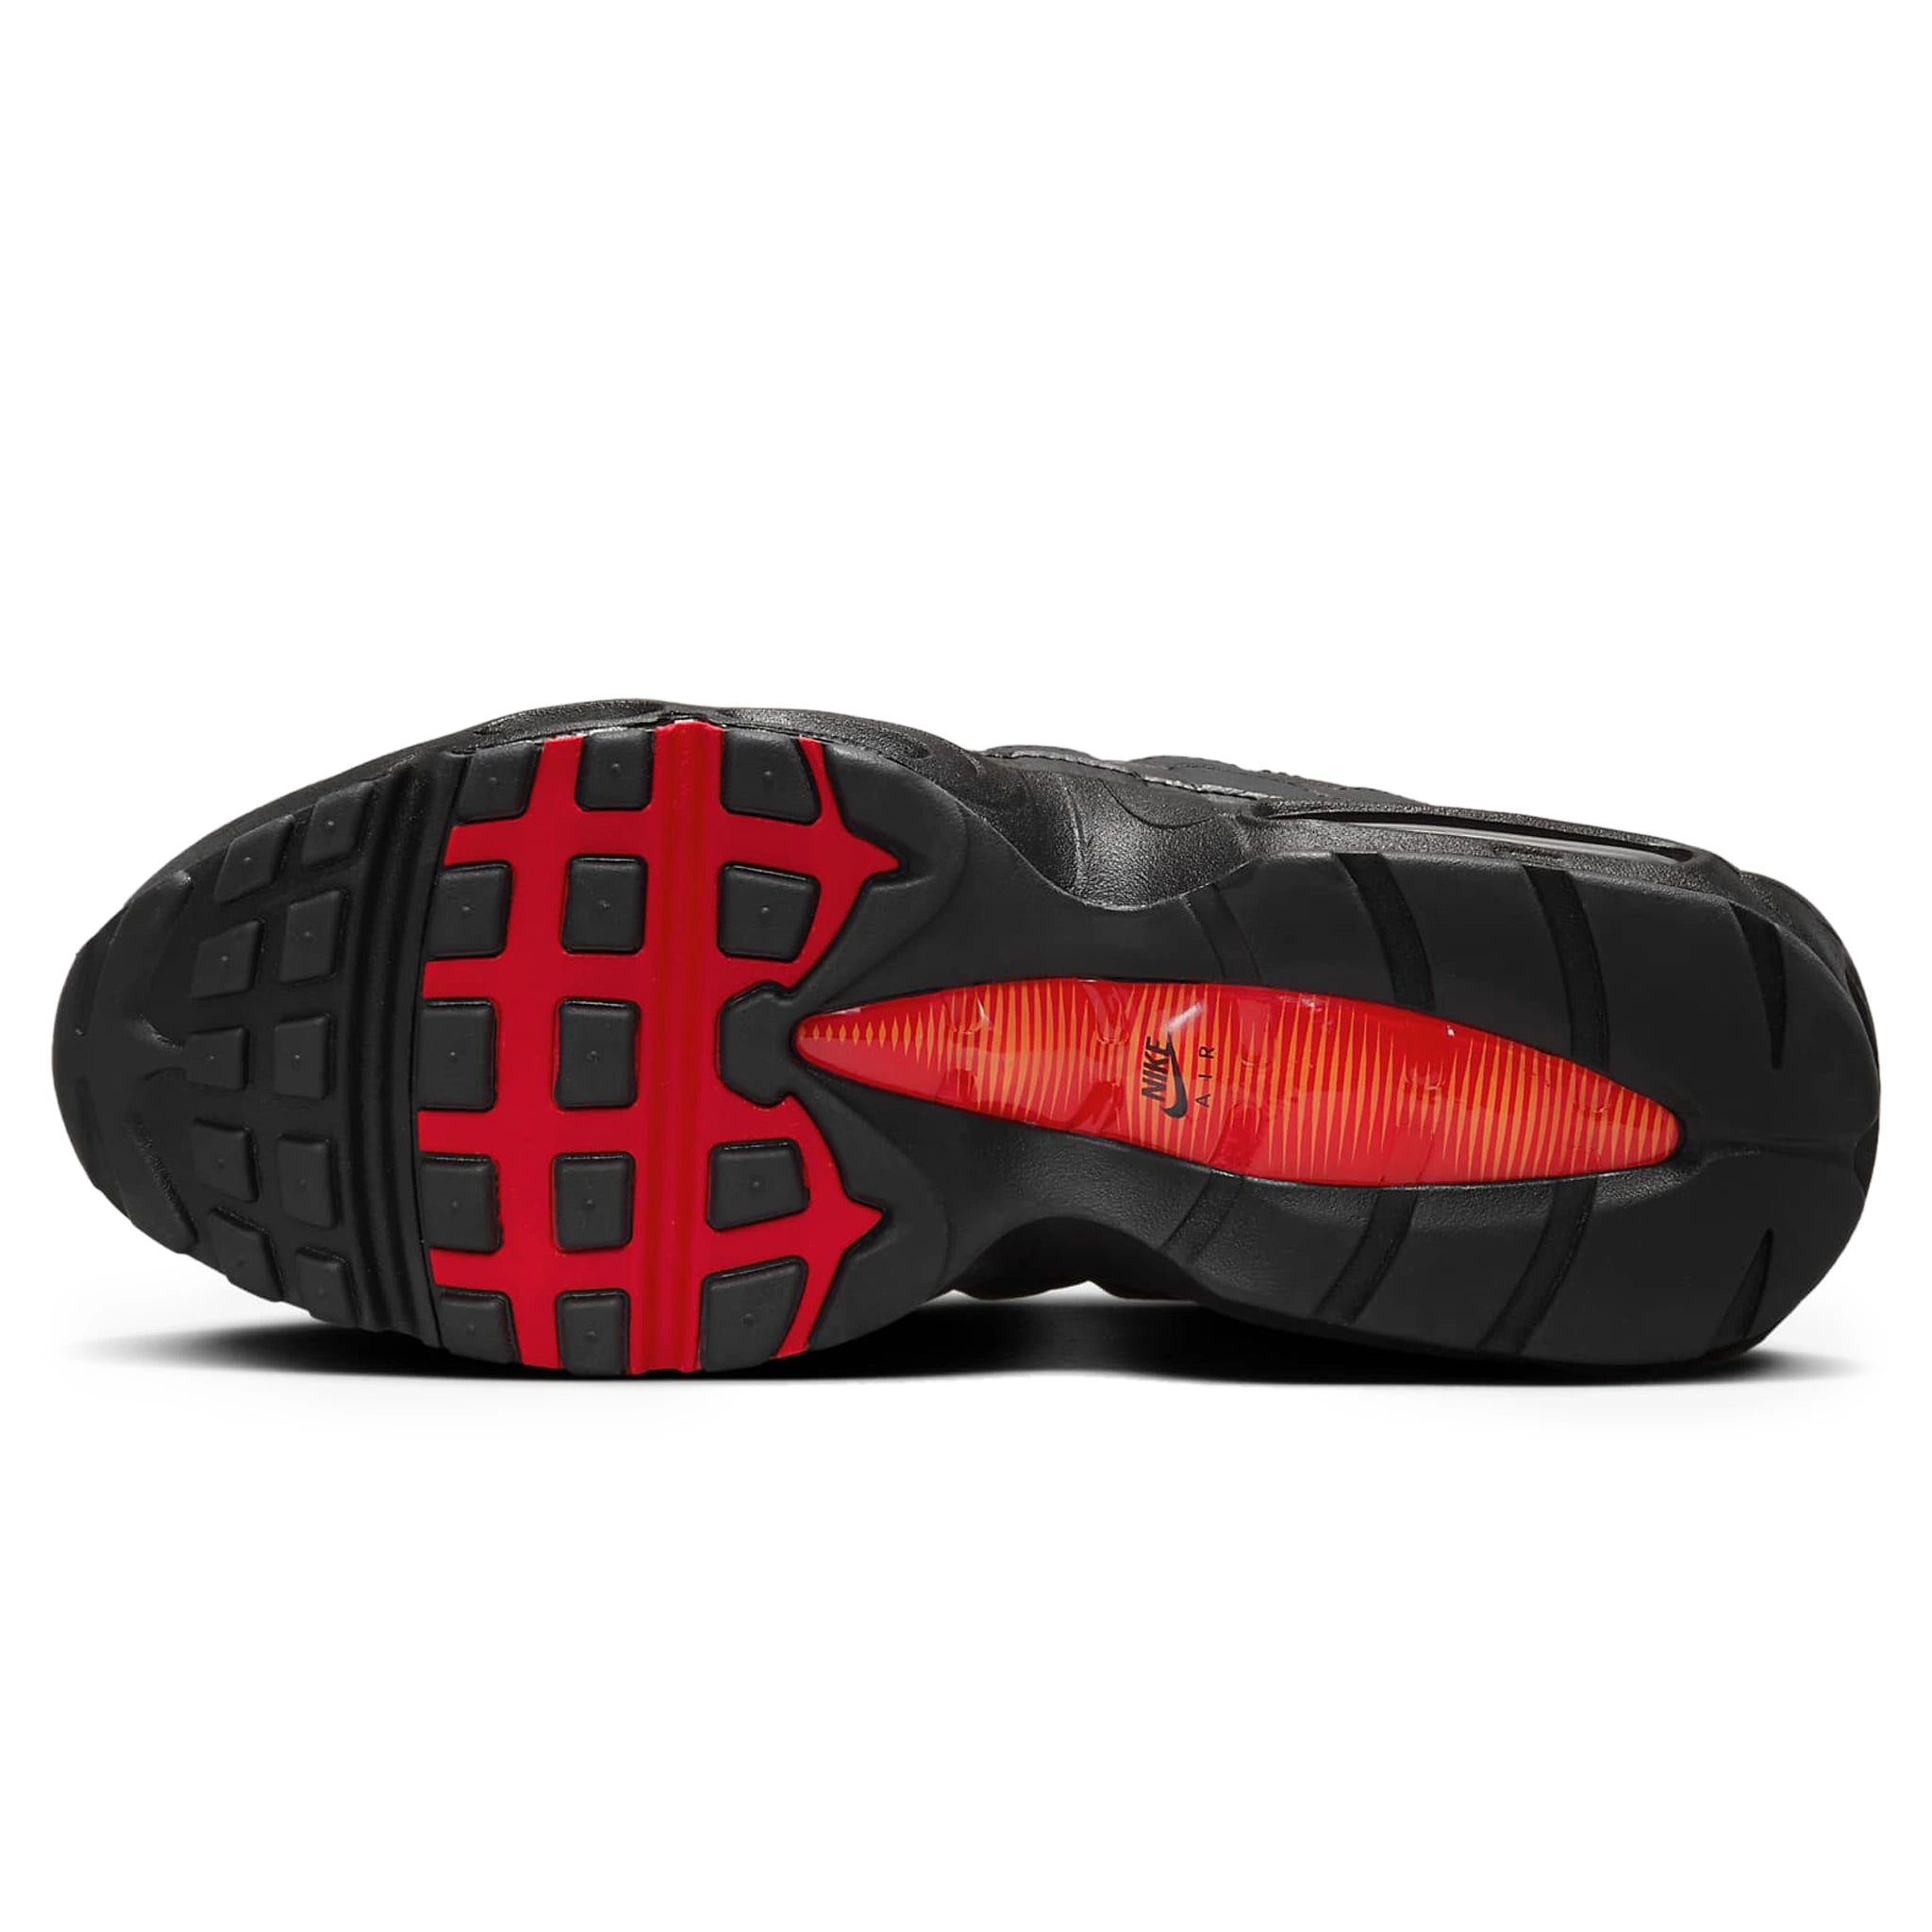 Sole view of Nike Air Max 95 Black Red Orange FZ4626-002